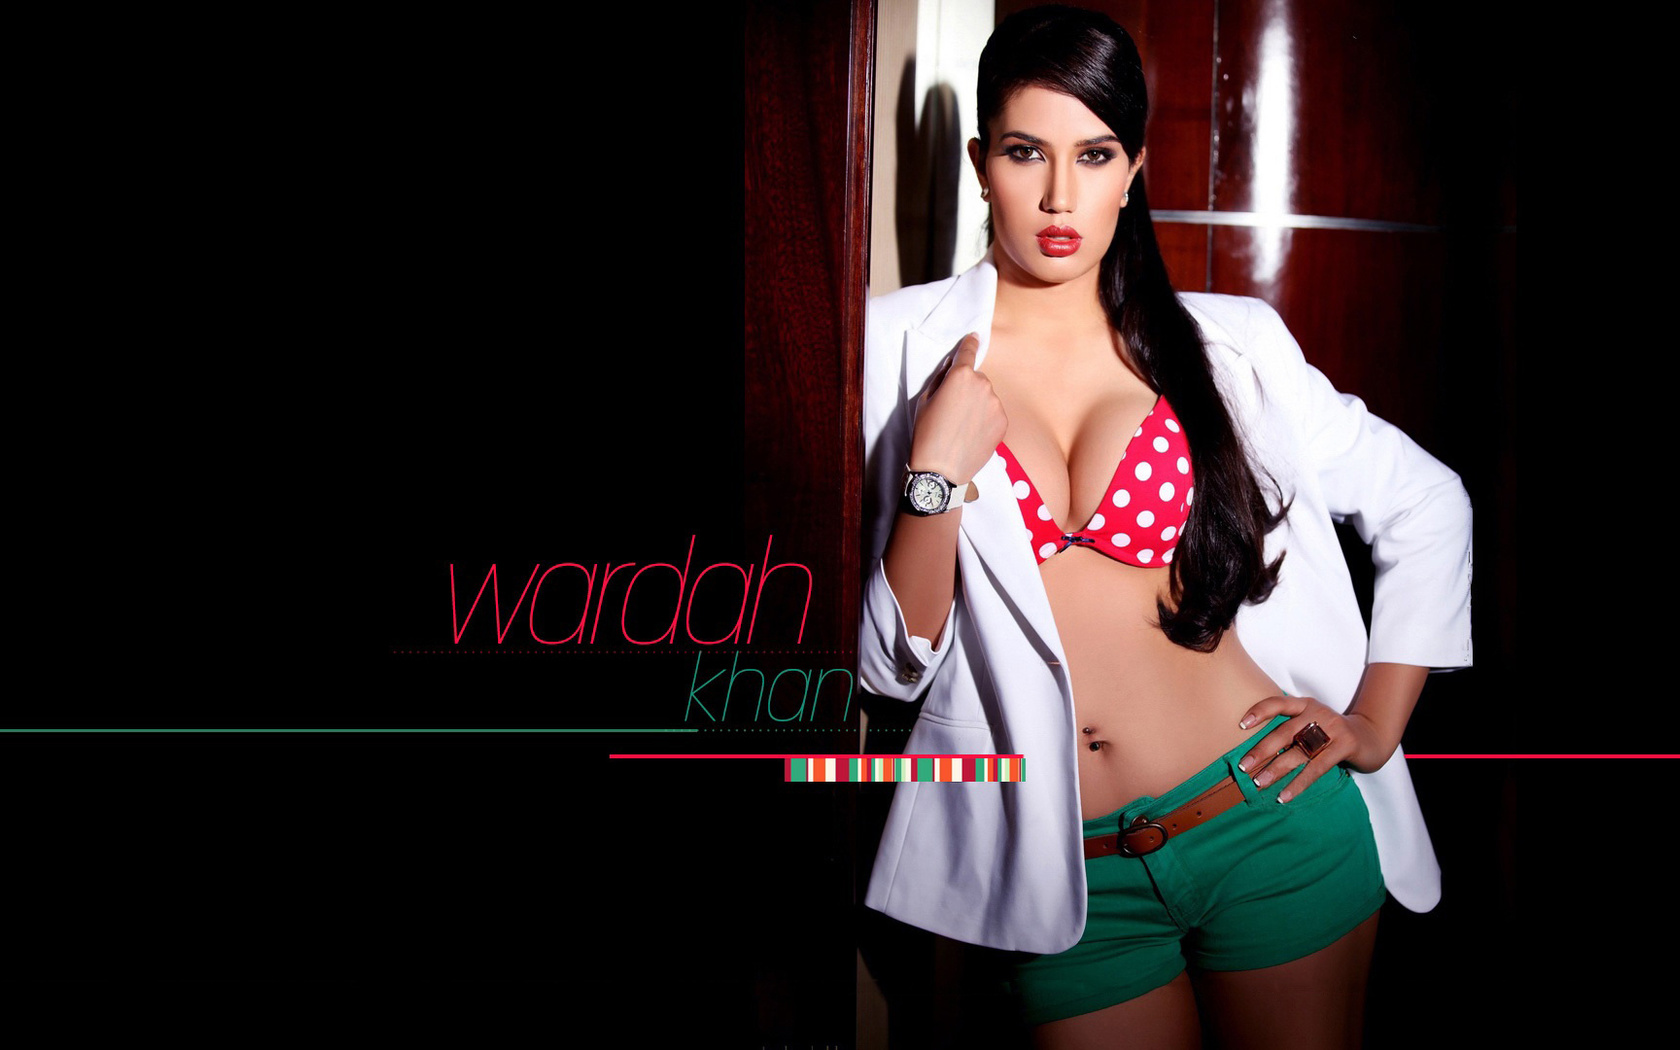 wardah khan, bollywood, celebrity, actress, model, girl